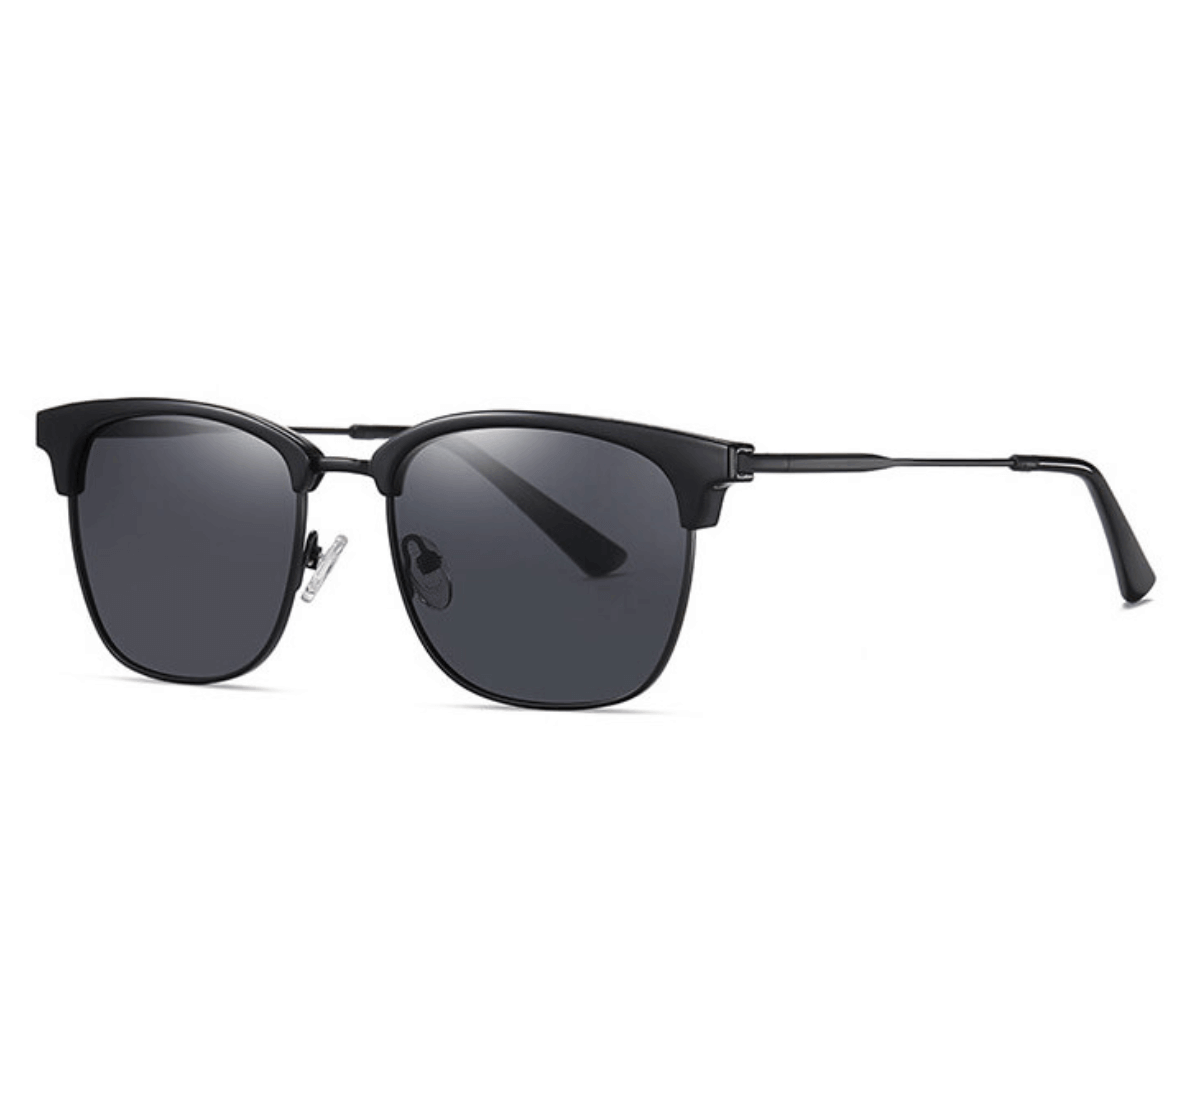 Custom Polarized Sunglasses, black eyebrow sunglasses, custom logo polarized sunglasses, custom sunglasses with logo, custom sunglasses manufacturers, Custom eyewear manufacturers